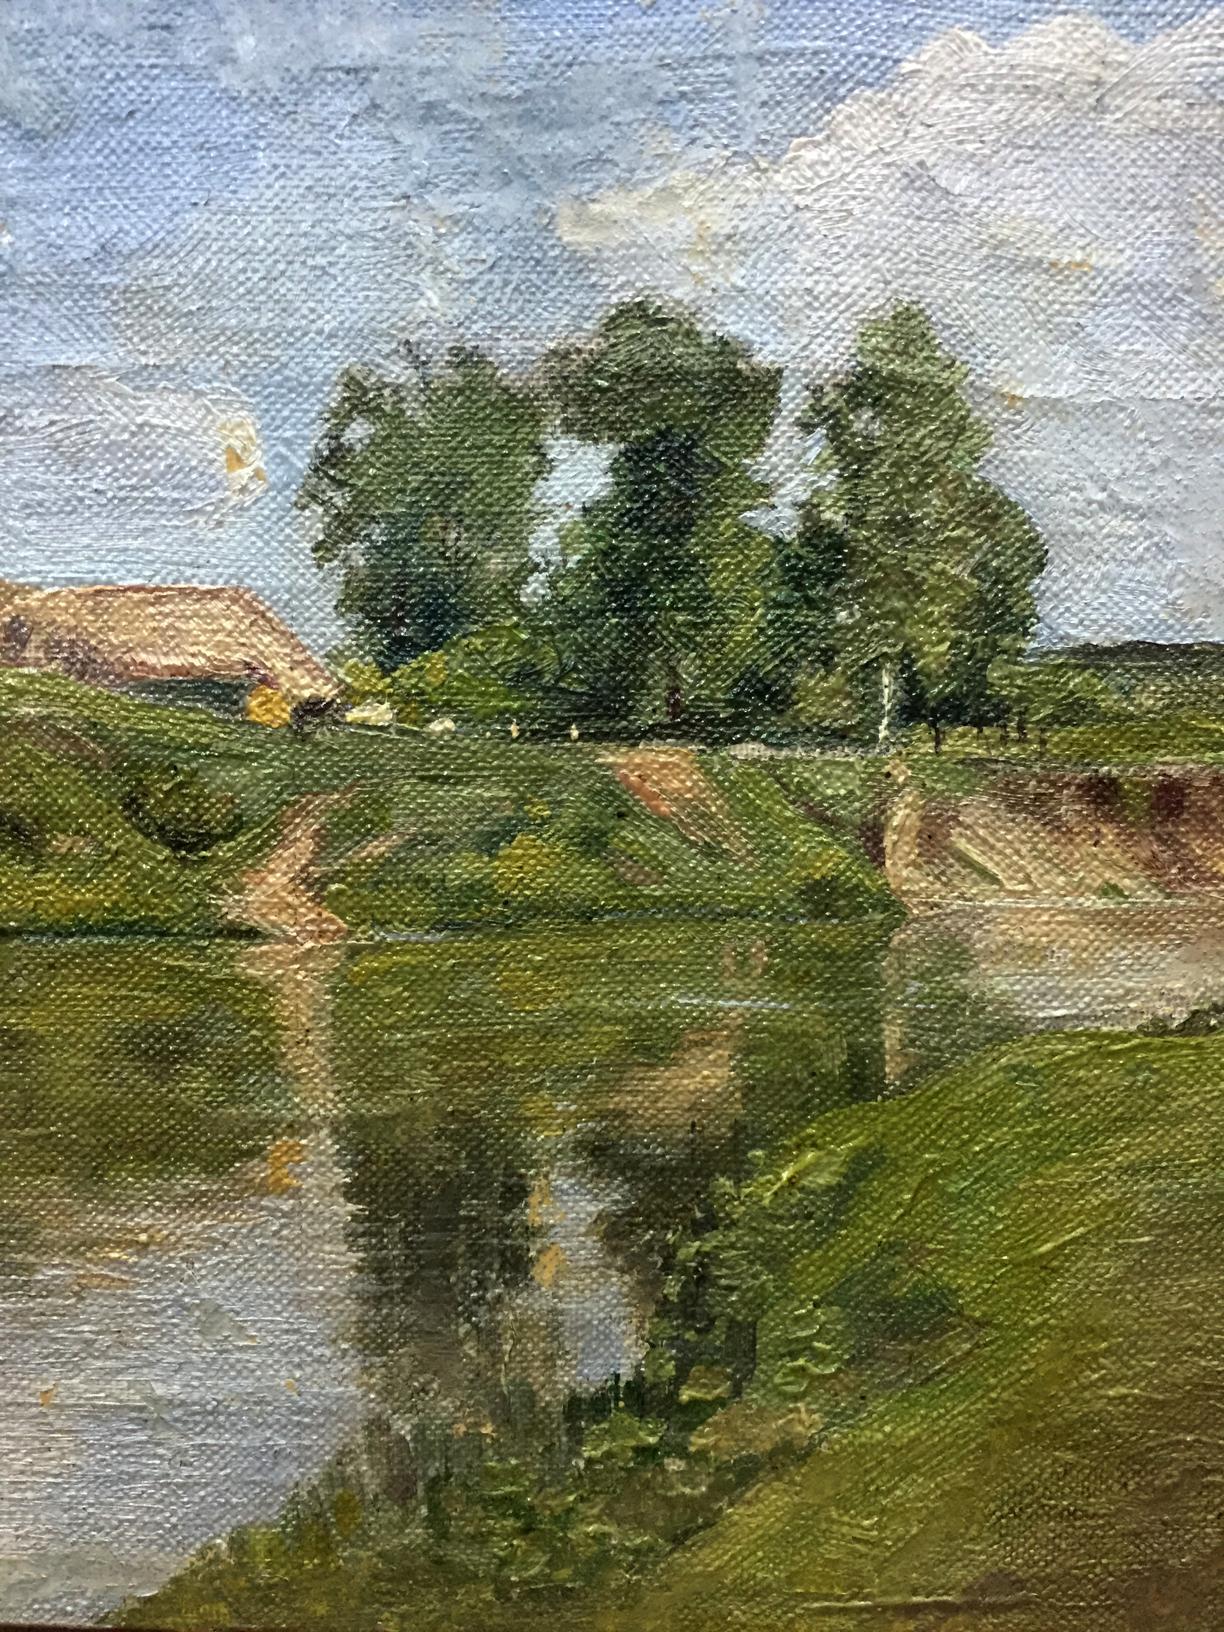 Oil Painting River Art